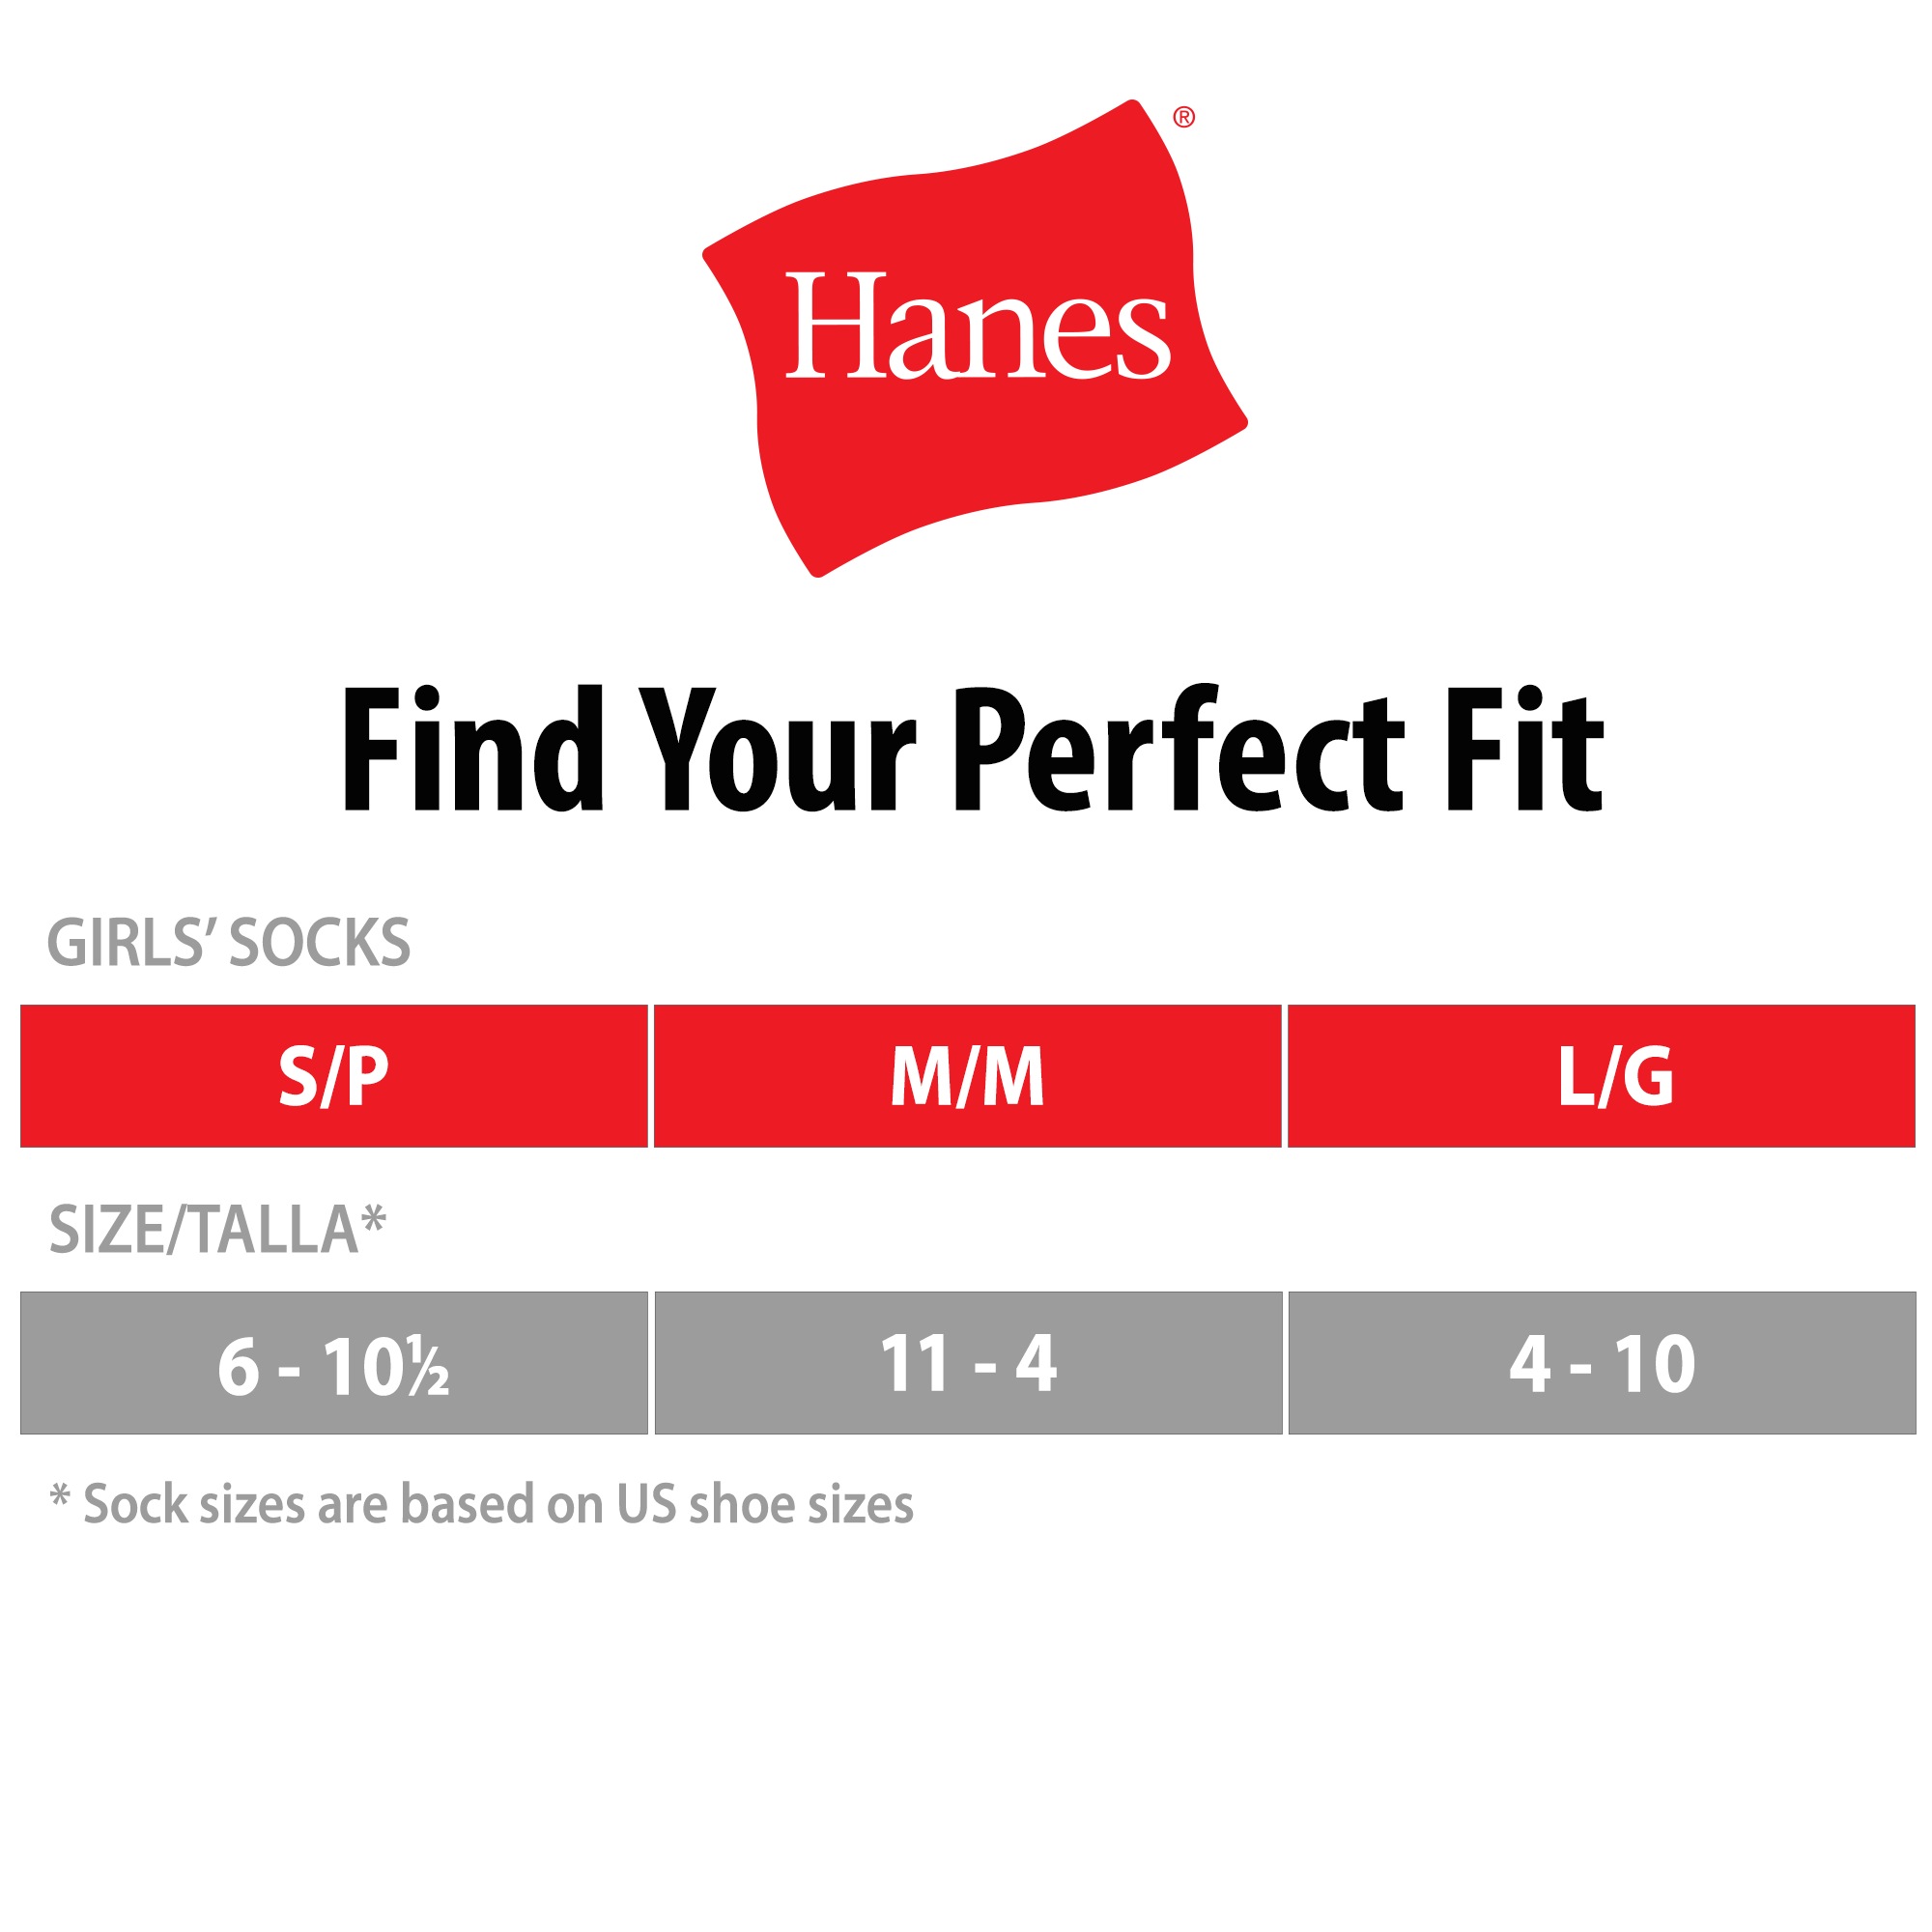 Hanes Girls' Super No Show Socks, 20 Pack, Sizes S-L - image 2 of 4